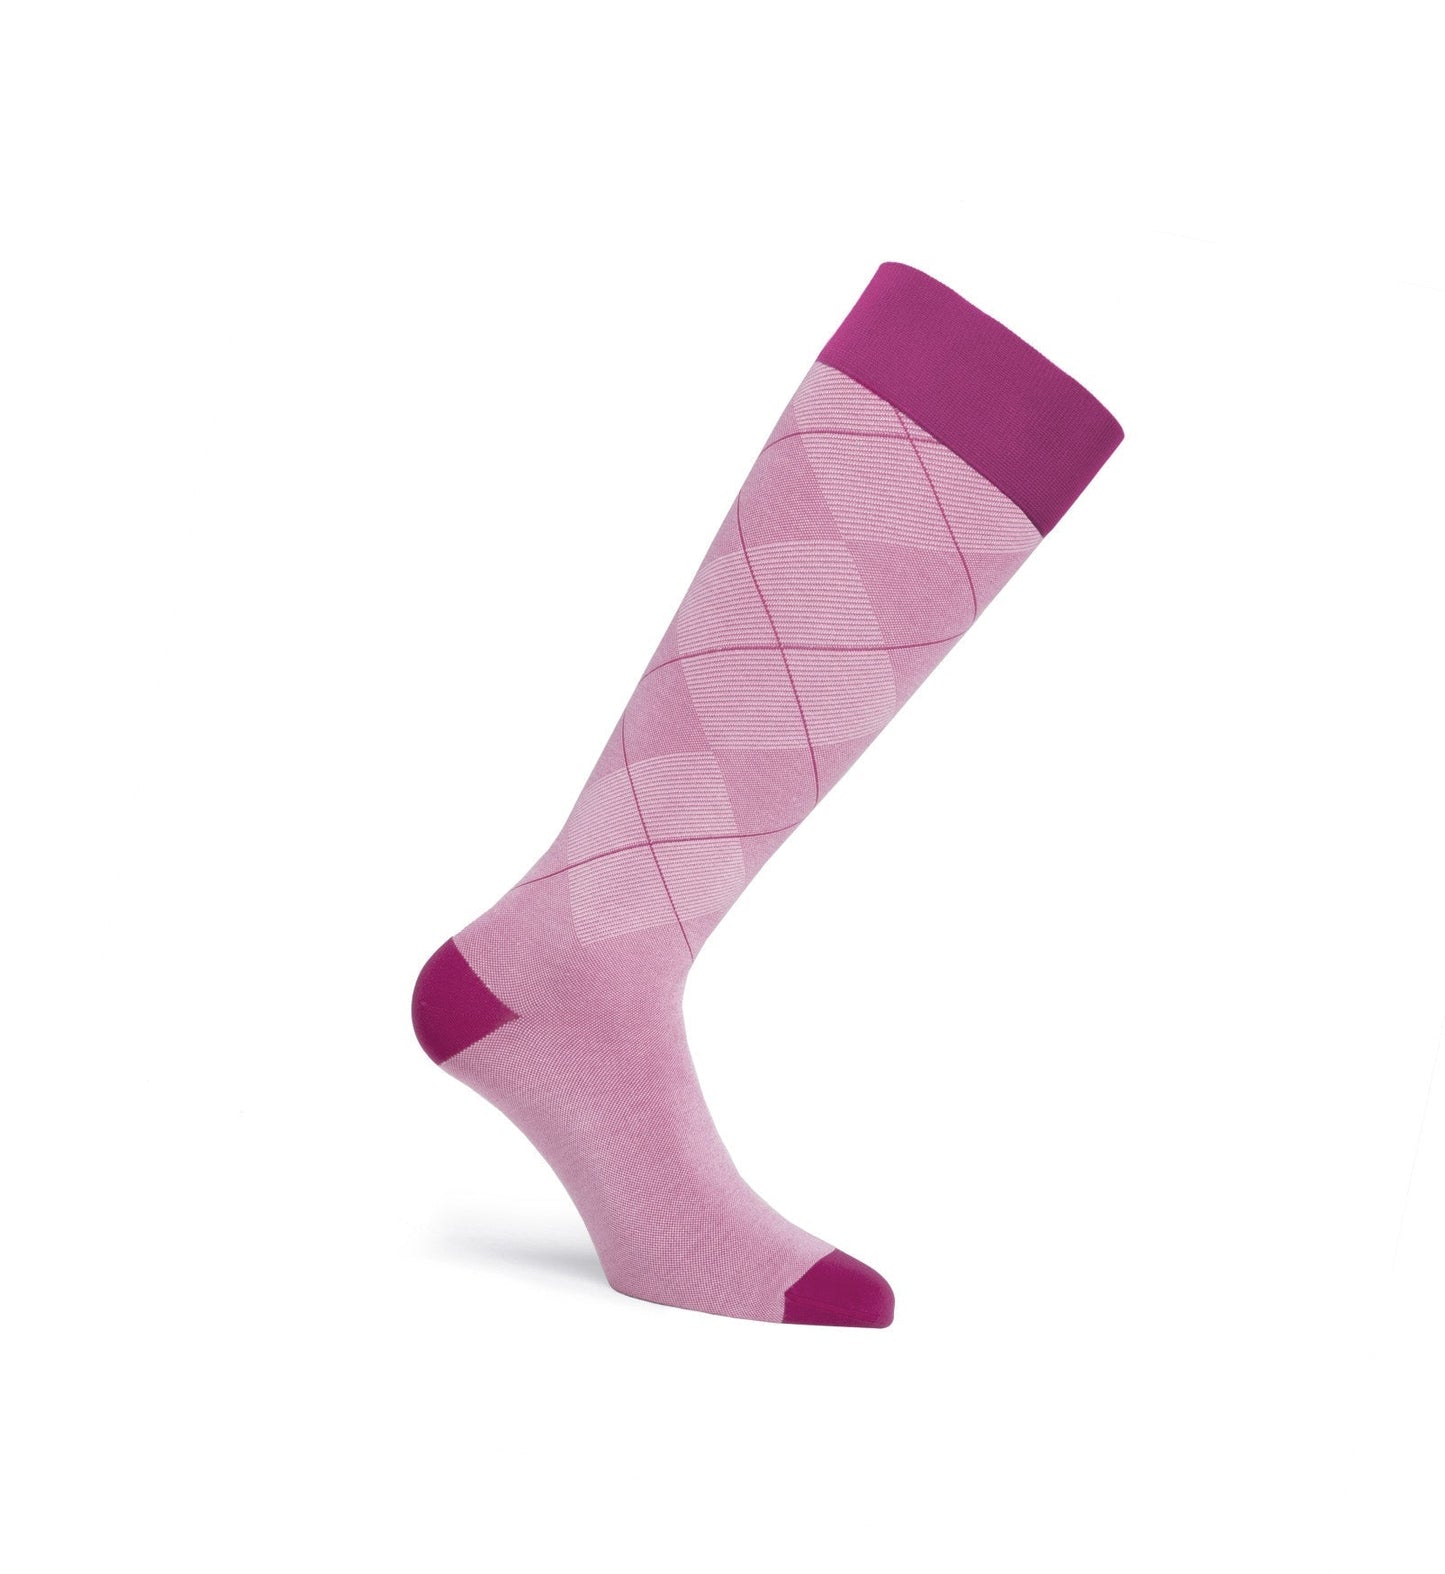 JOBST Casual Pattern Compression Socks 15-20 mmHg, Knee High, Closed Toe Full Calf Petite